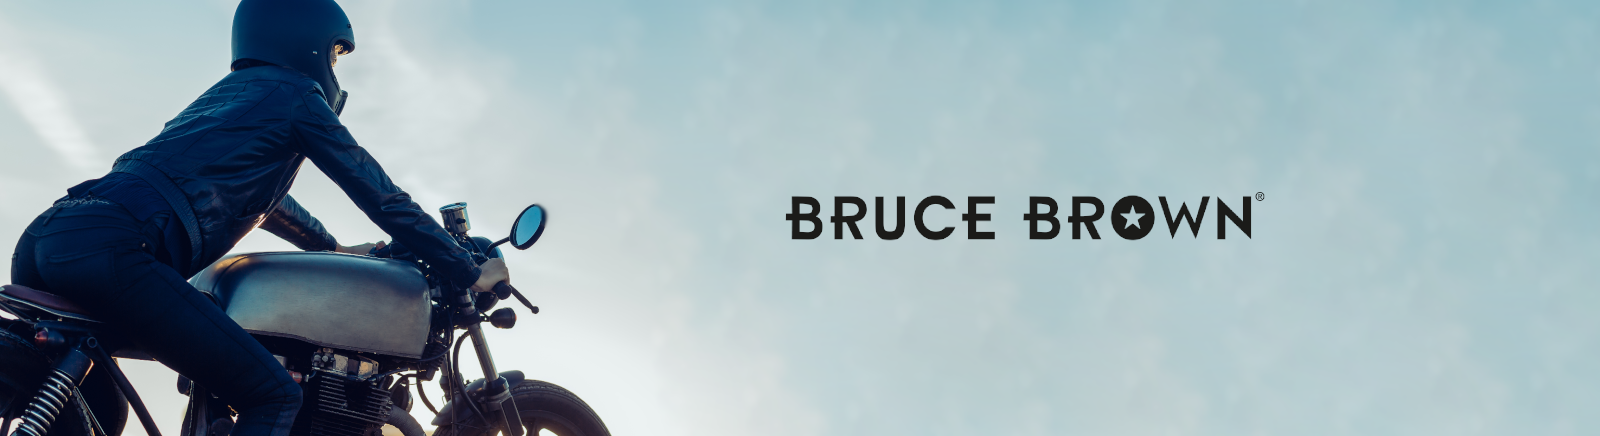 Juppen: Bruce Brown Zehentrenner für Herren online shoppen